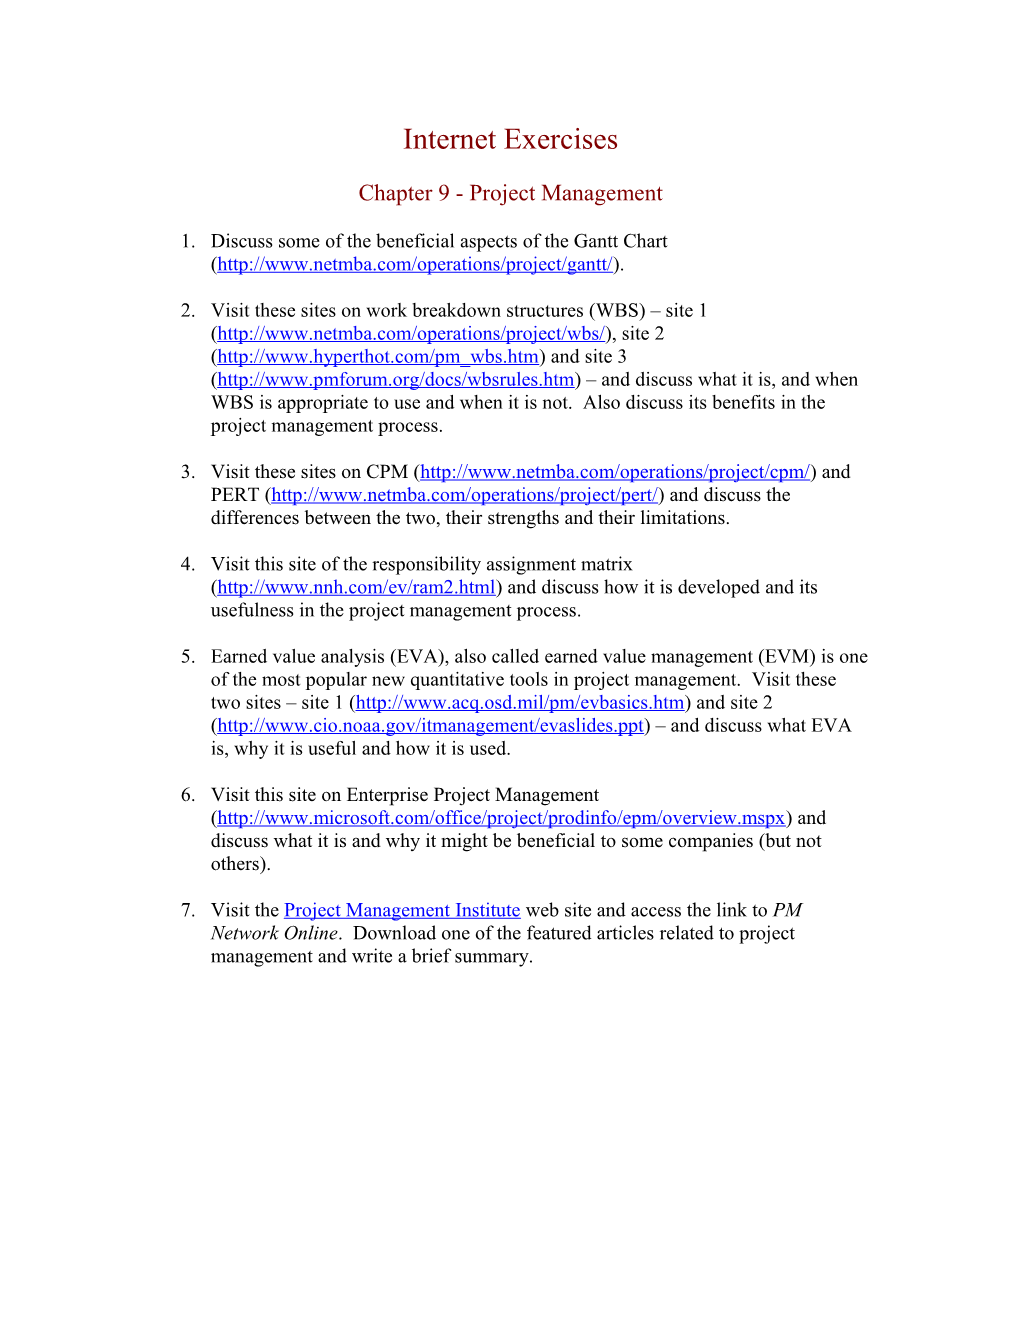 Chapter 17 - Project Management